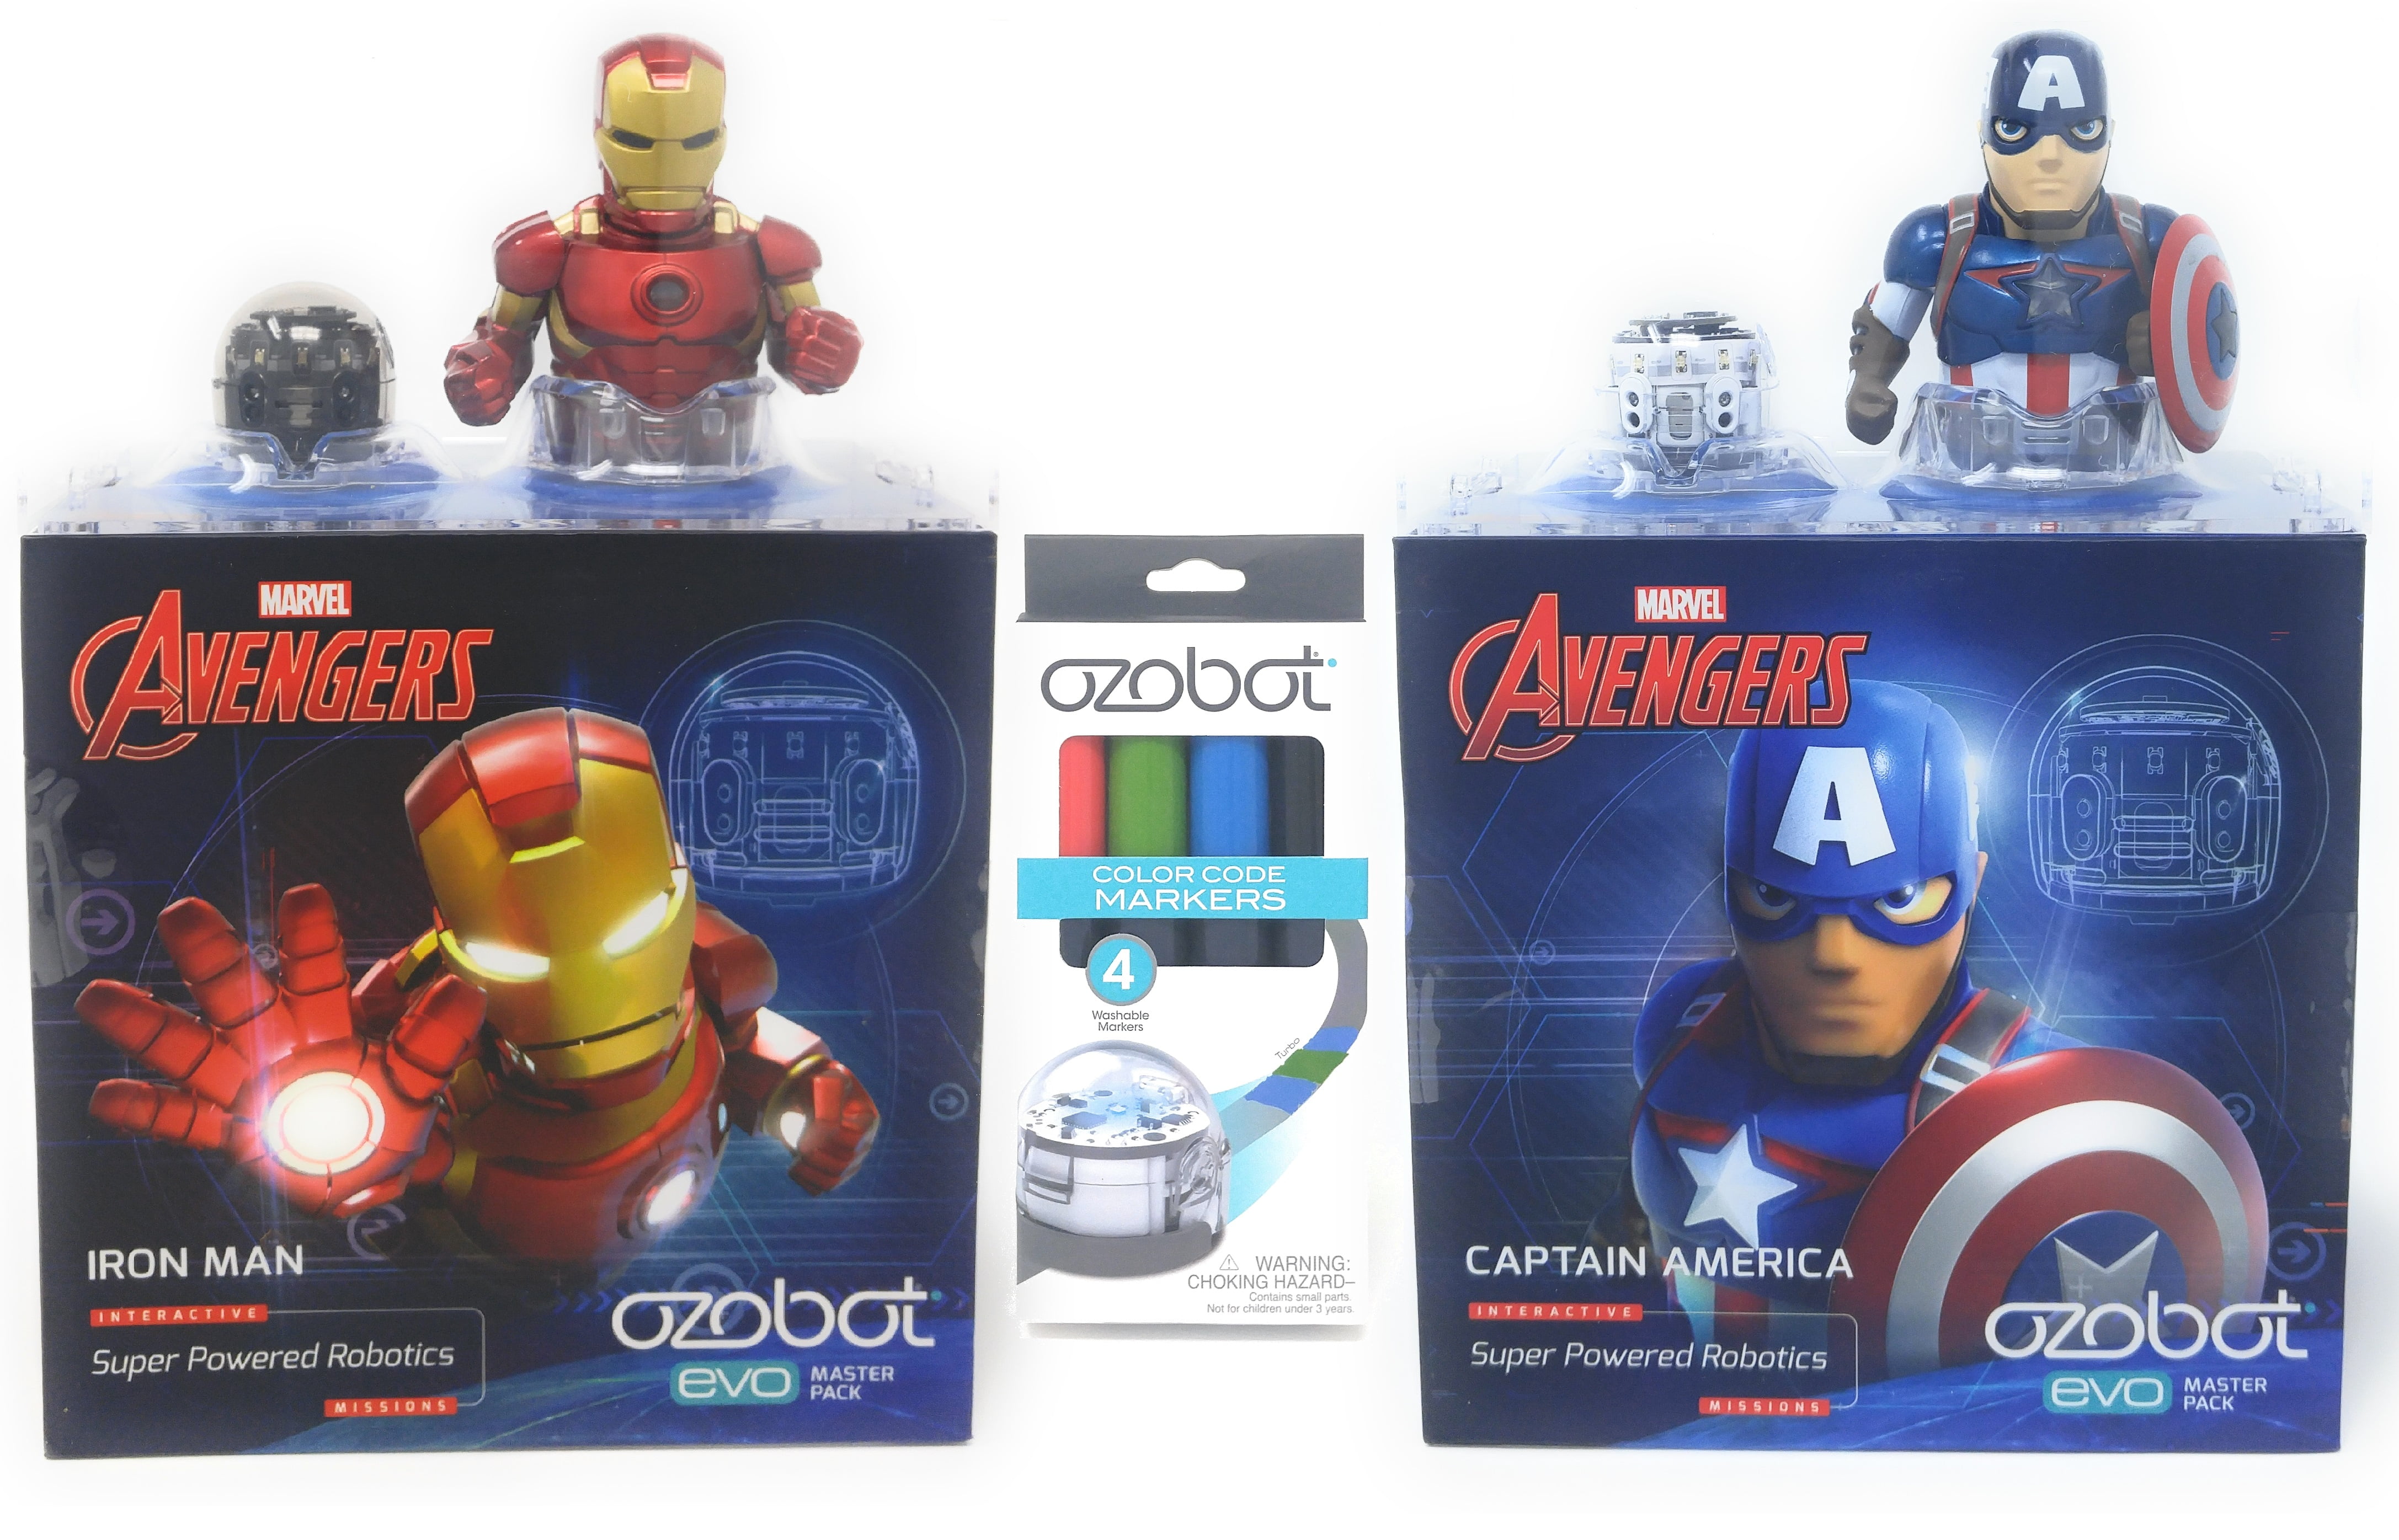 EVO 040101 ozobot Captain America Super Powered Robotics Master Pack for sale online 